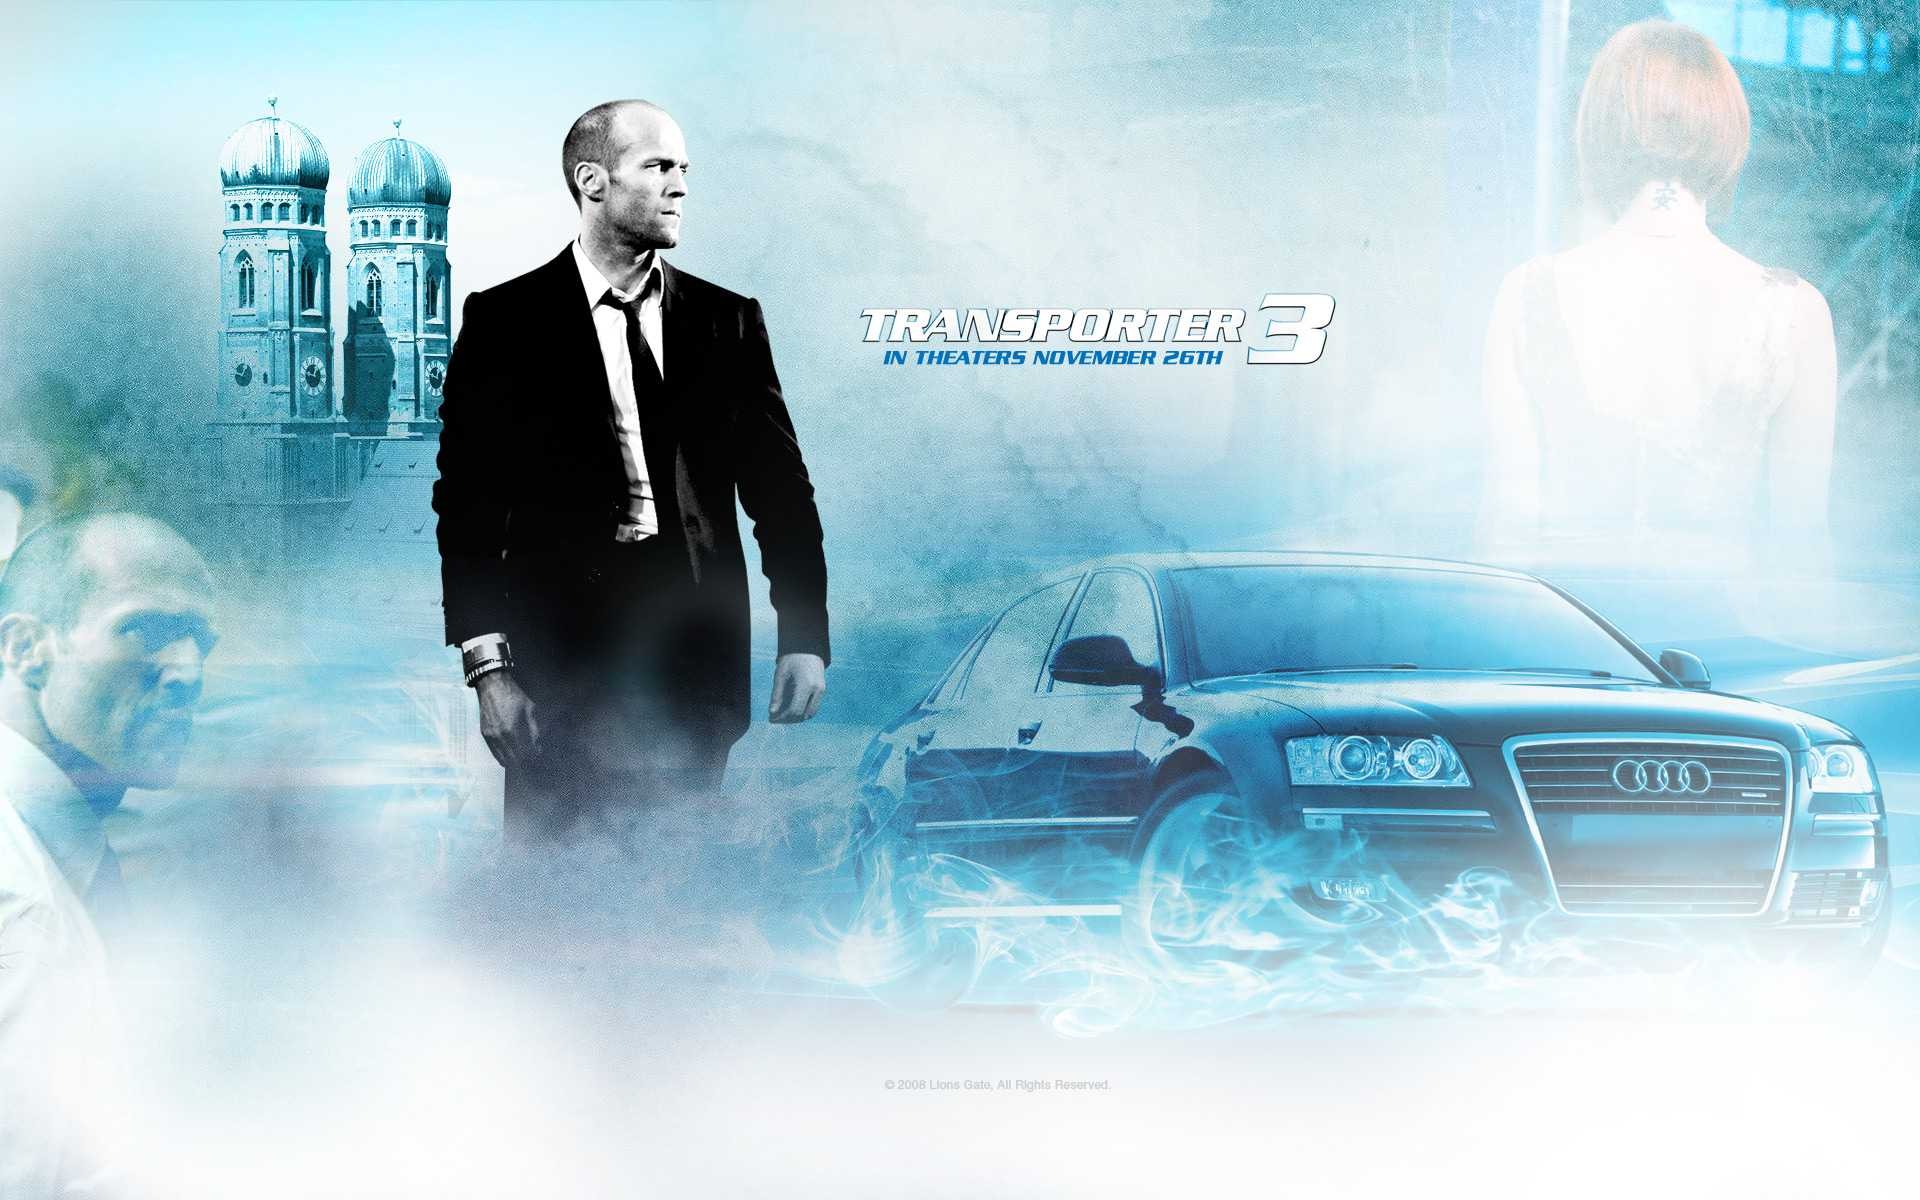 Wallpaper del film Transporter 3 con Jason Statham